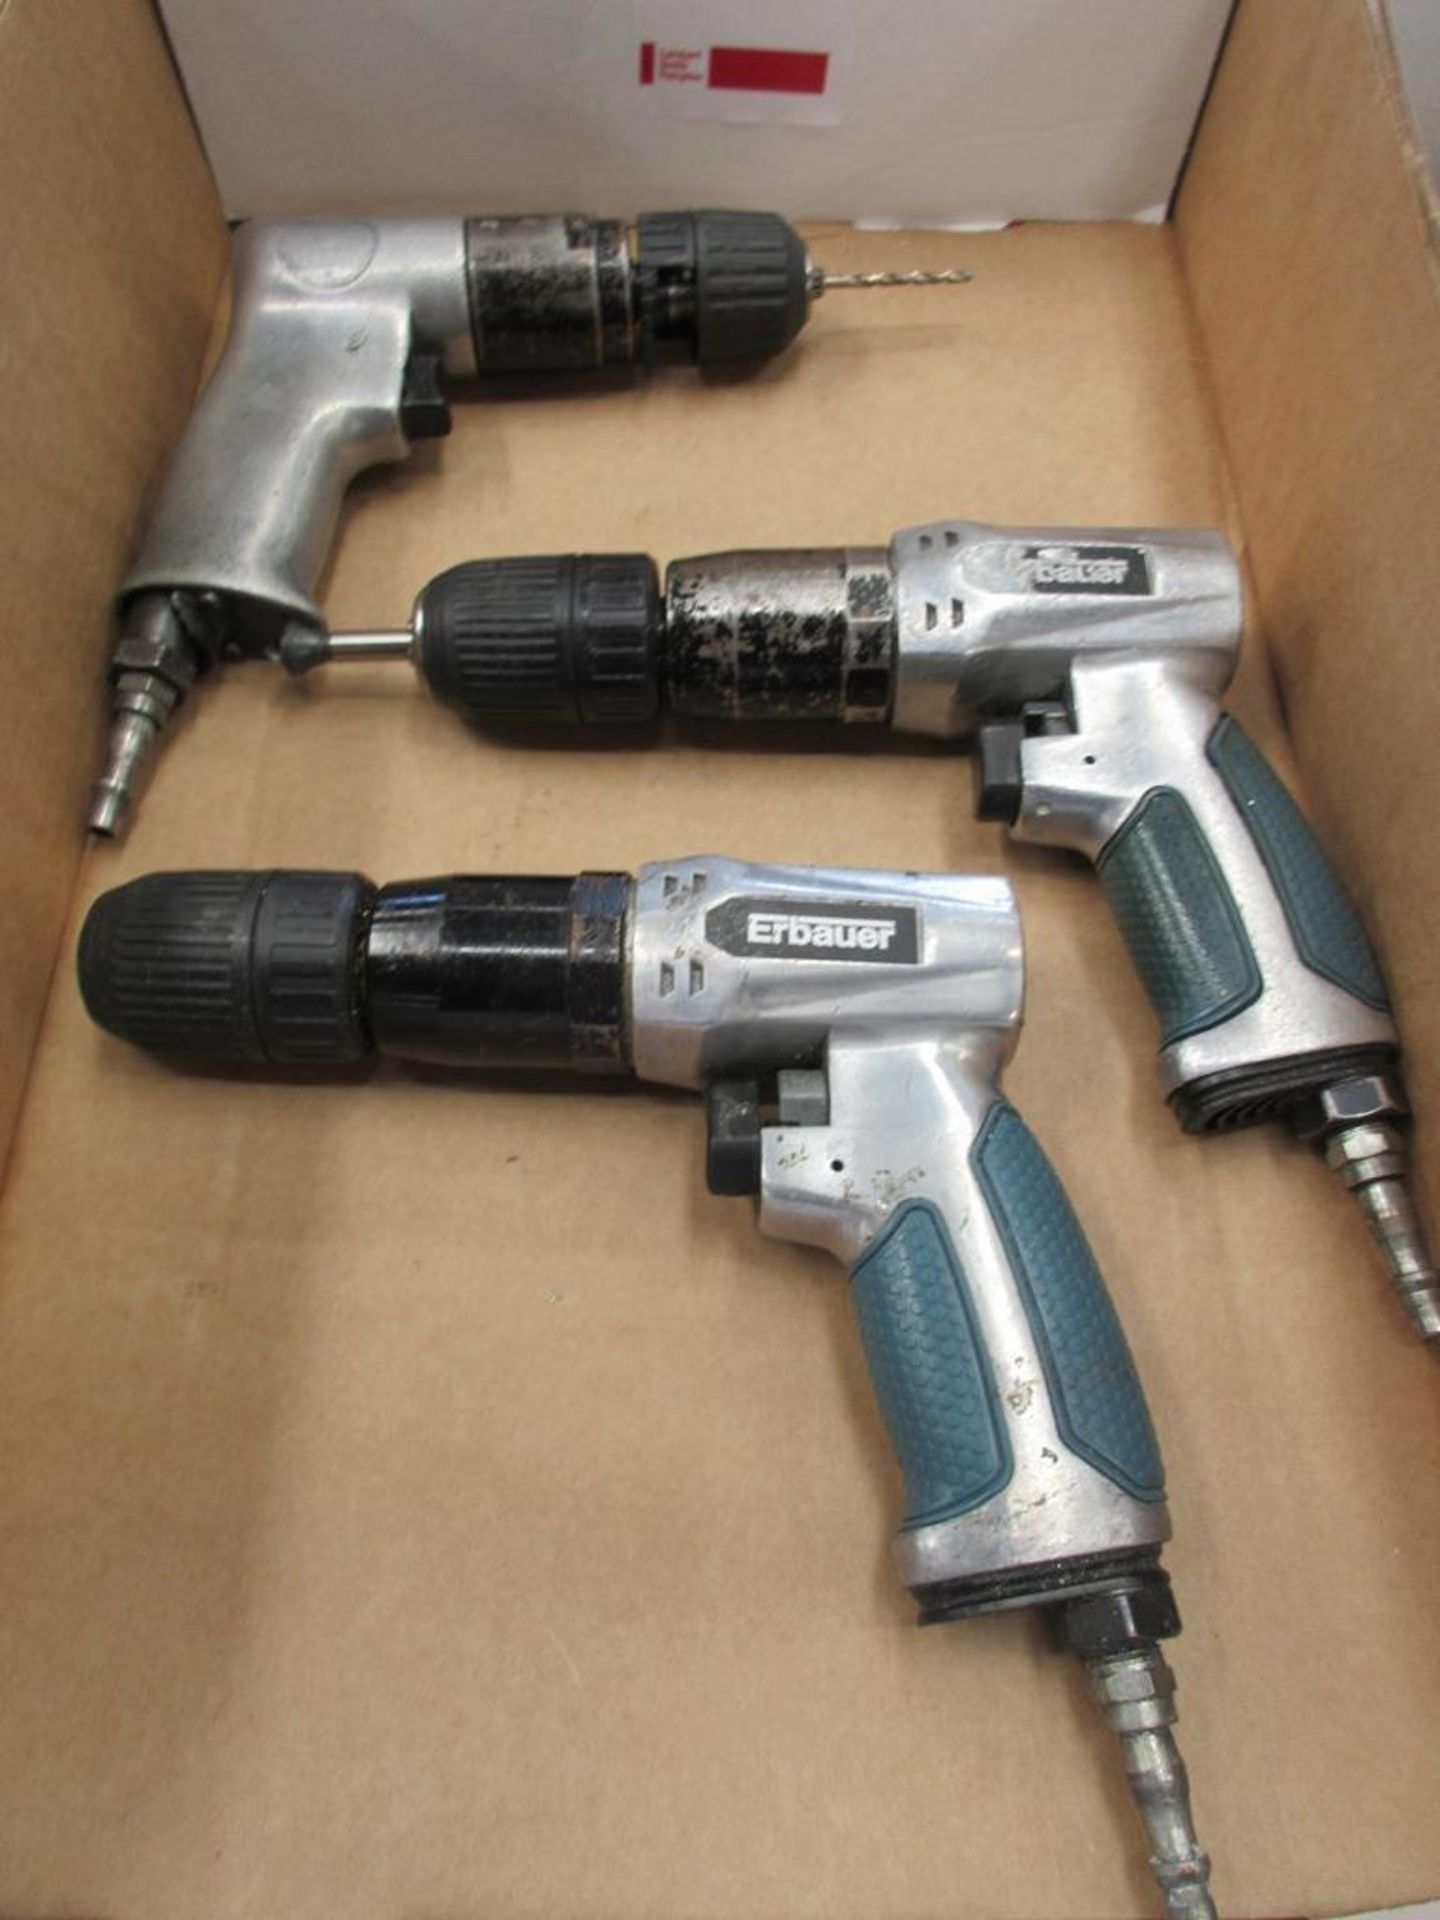 Three assorted pneumatic pistol grip drills